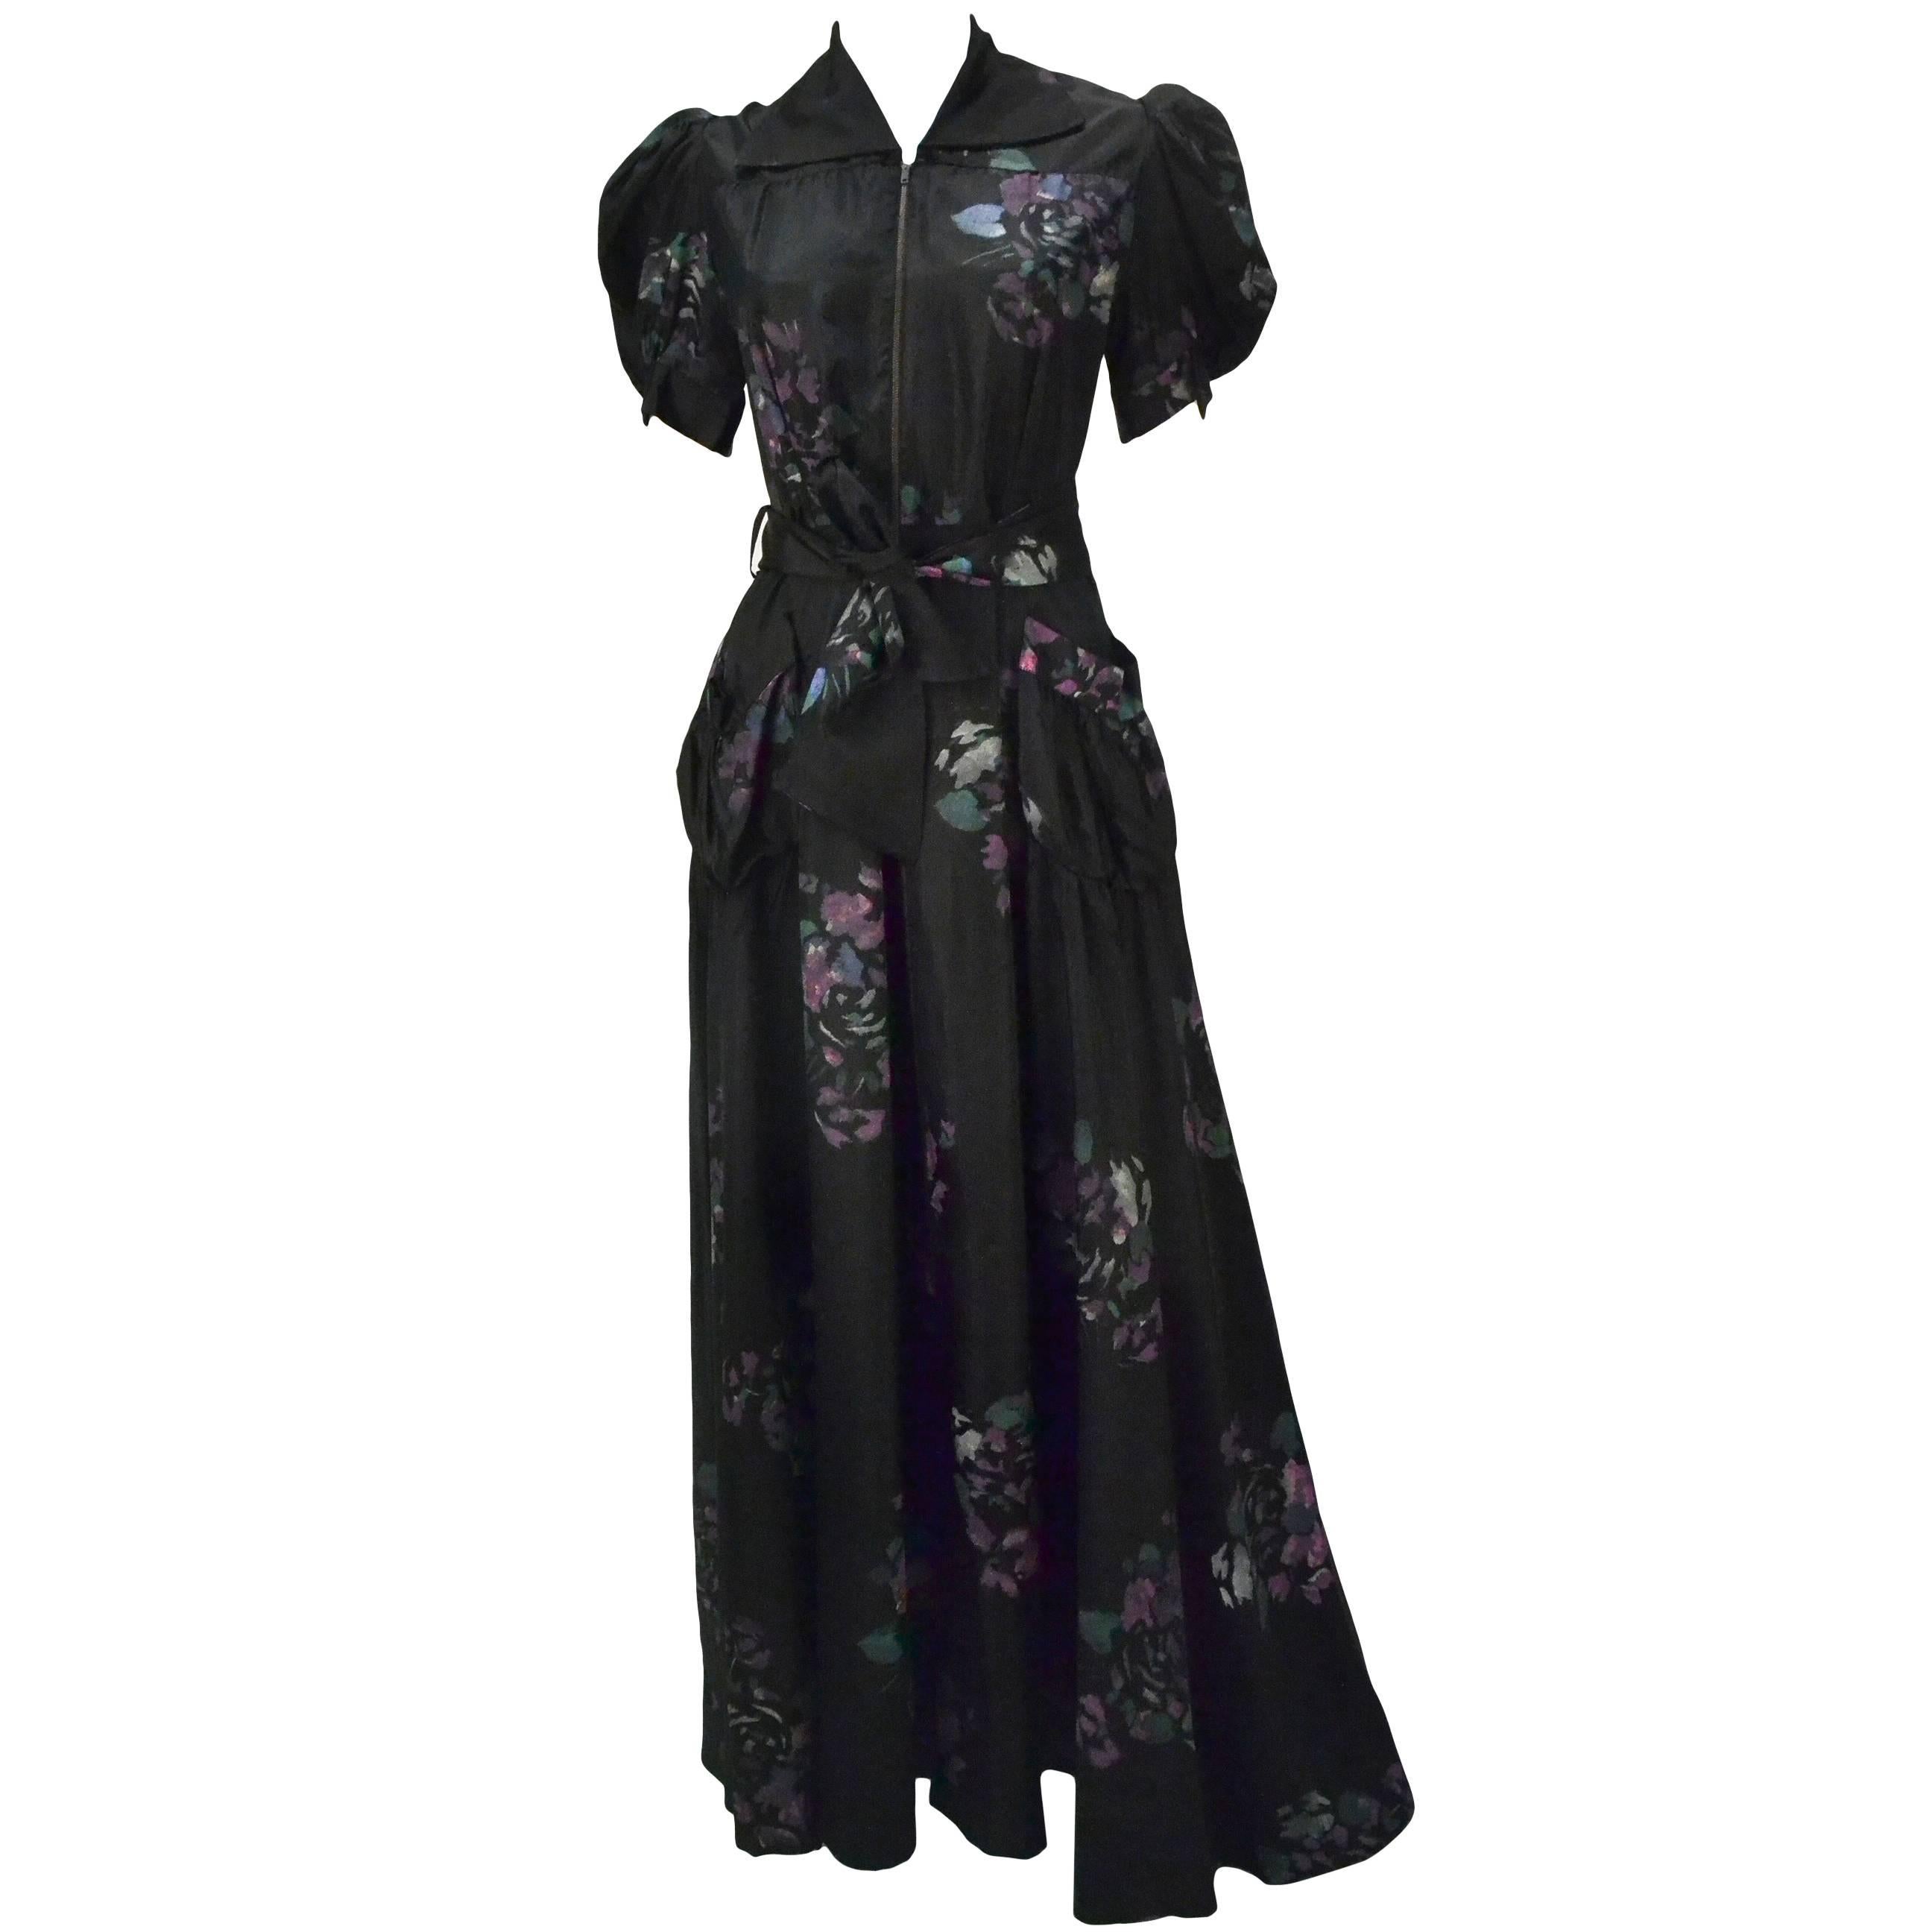 Stunning 1940's Royal Maid Loungewear Black Hand Painted Dress